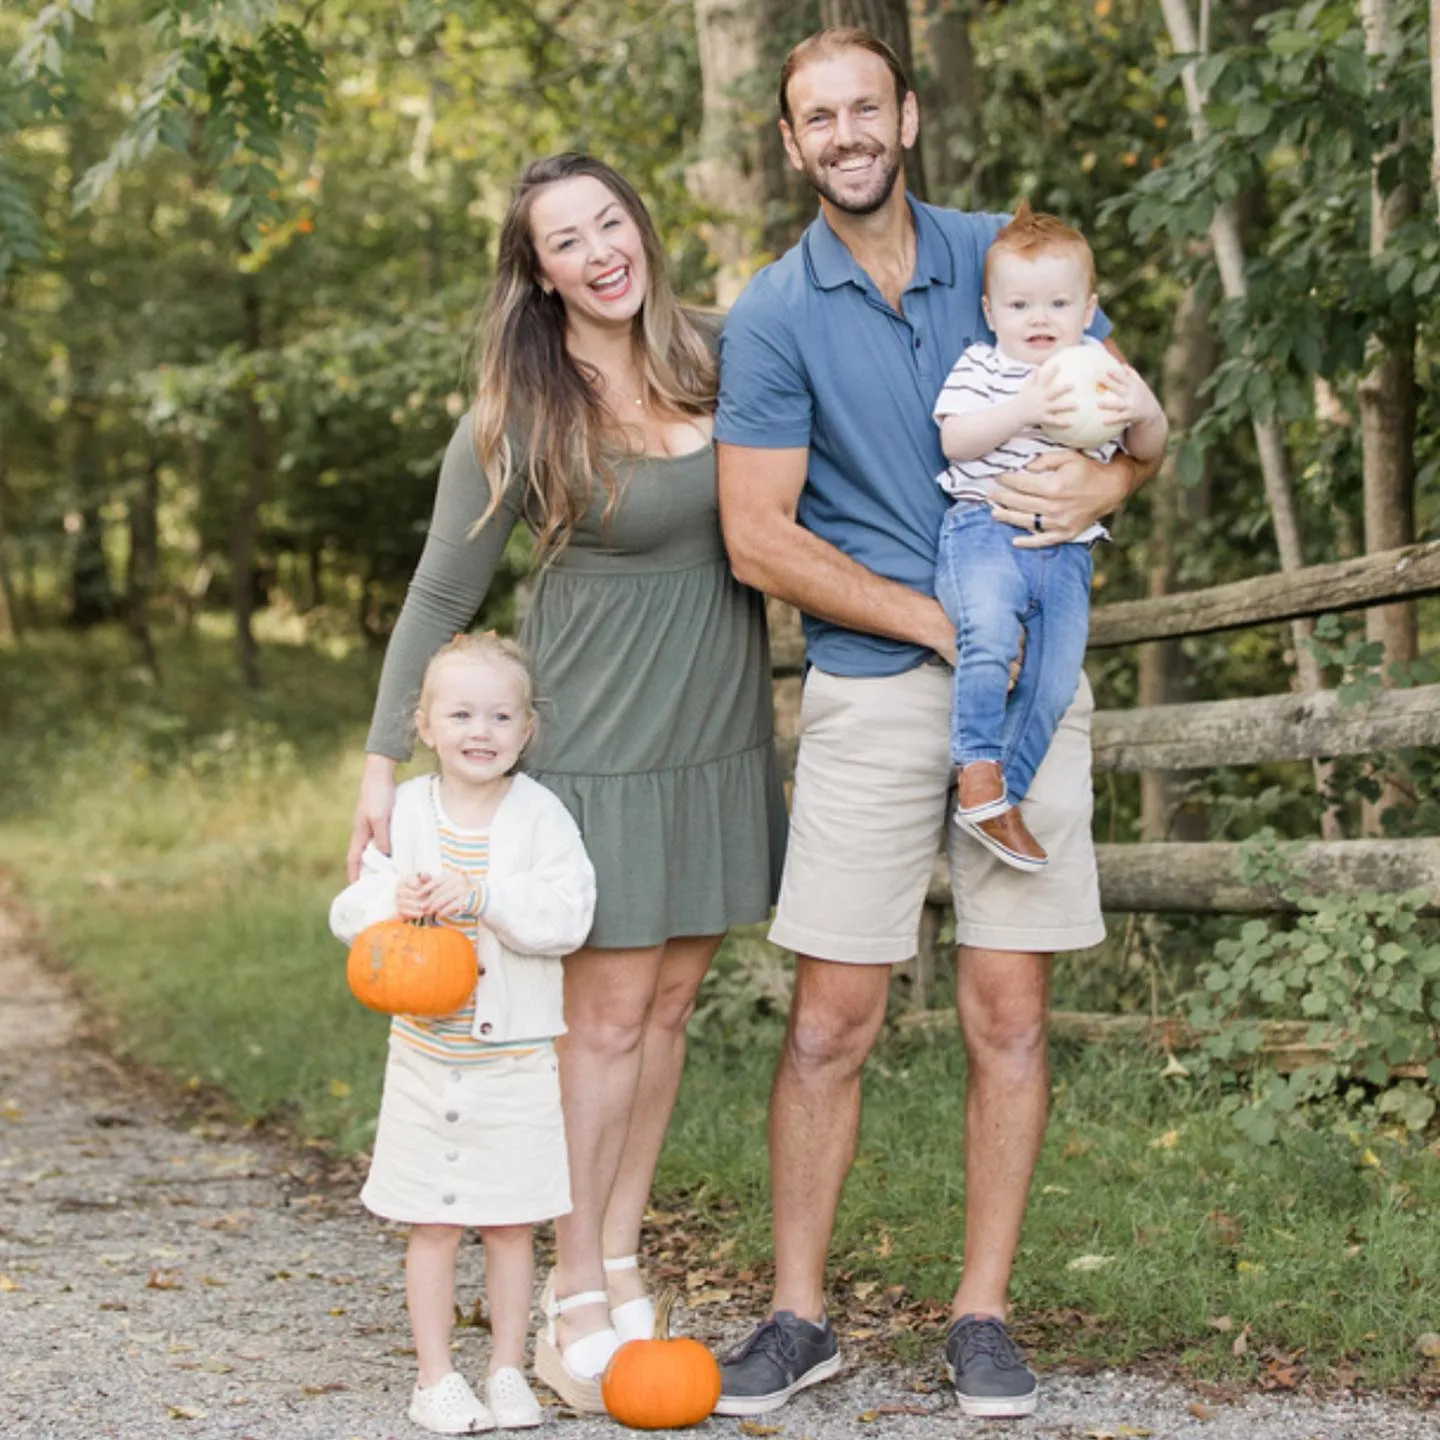 Jamie Otis and her husband, Doug Hehner, with their children during Halloween